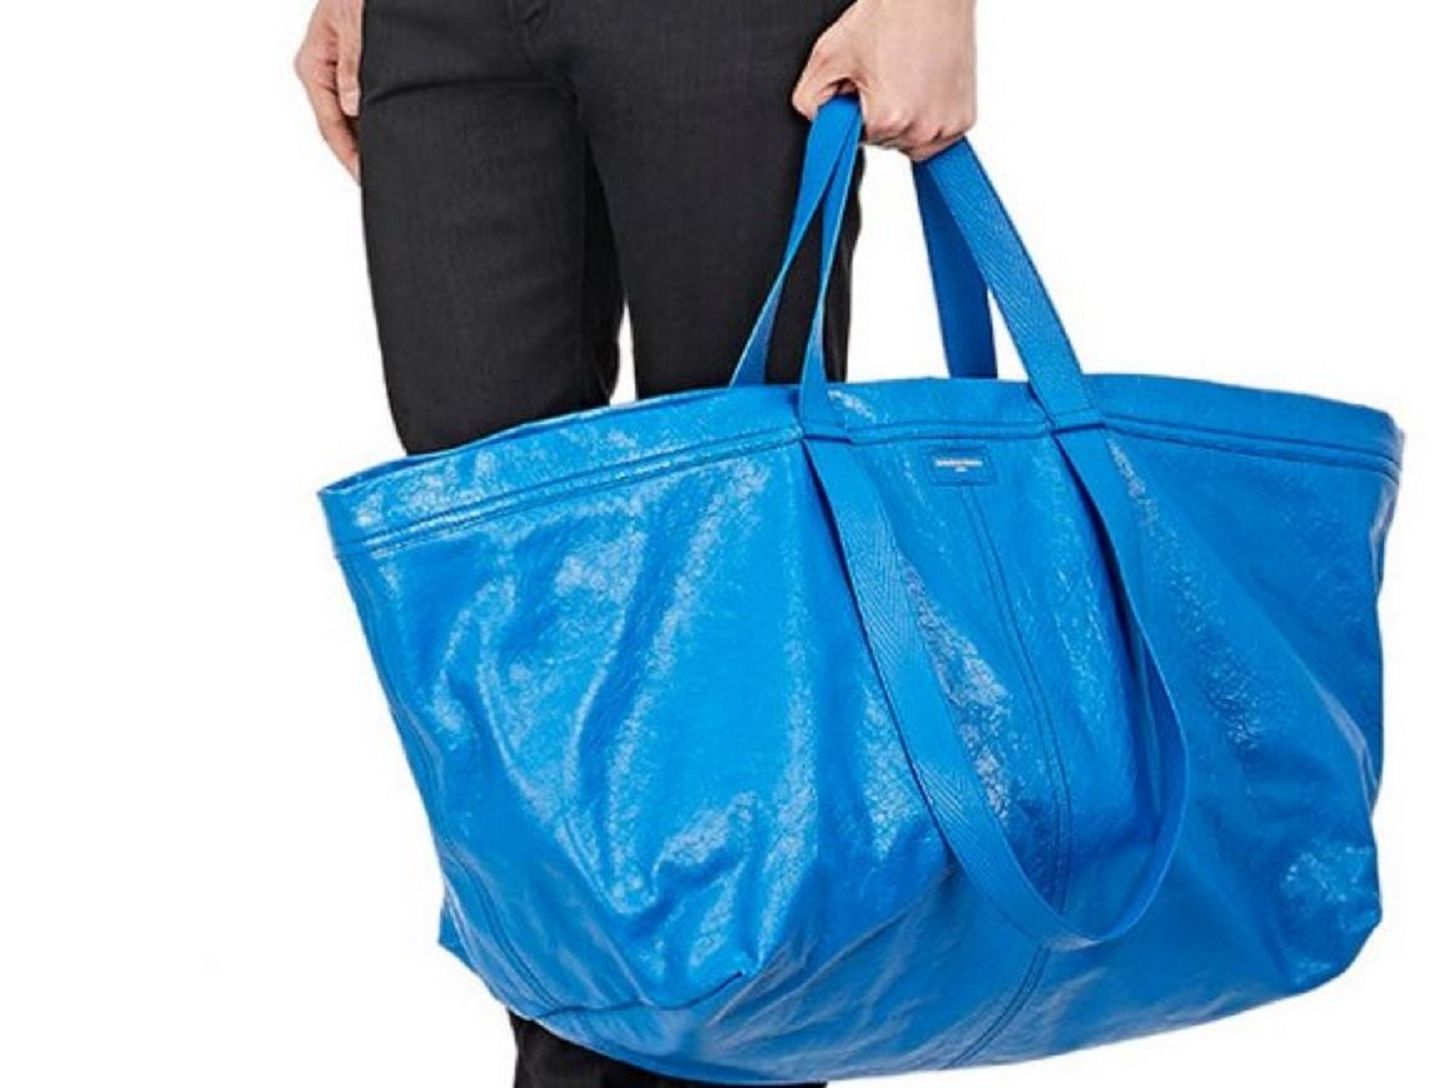 Balenciaga's bag just like Ikea's 99 tote CNN